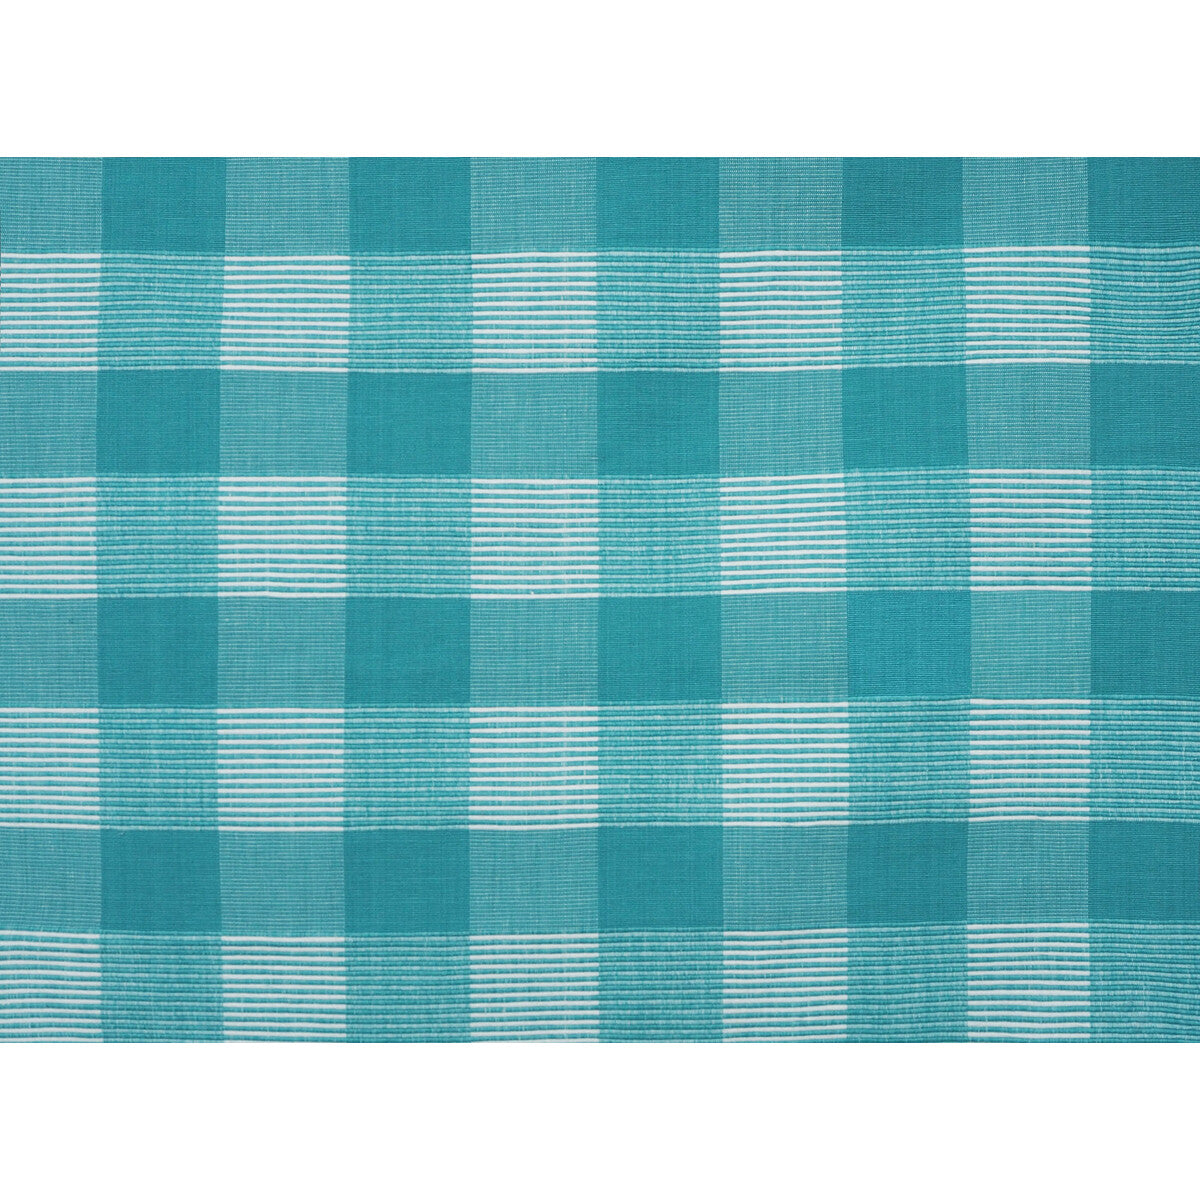 Siam Sq Cotton fabric in aqua pura color - pattern JAG-50061.131.0 - by Brunschwig &amp; Fils in the Festival collection